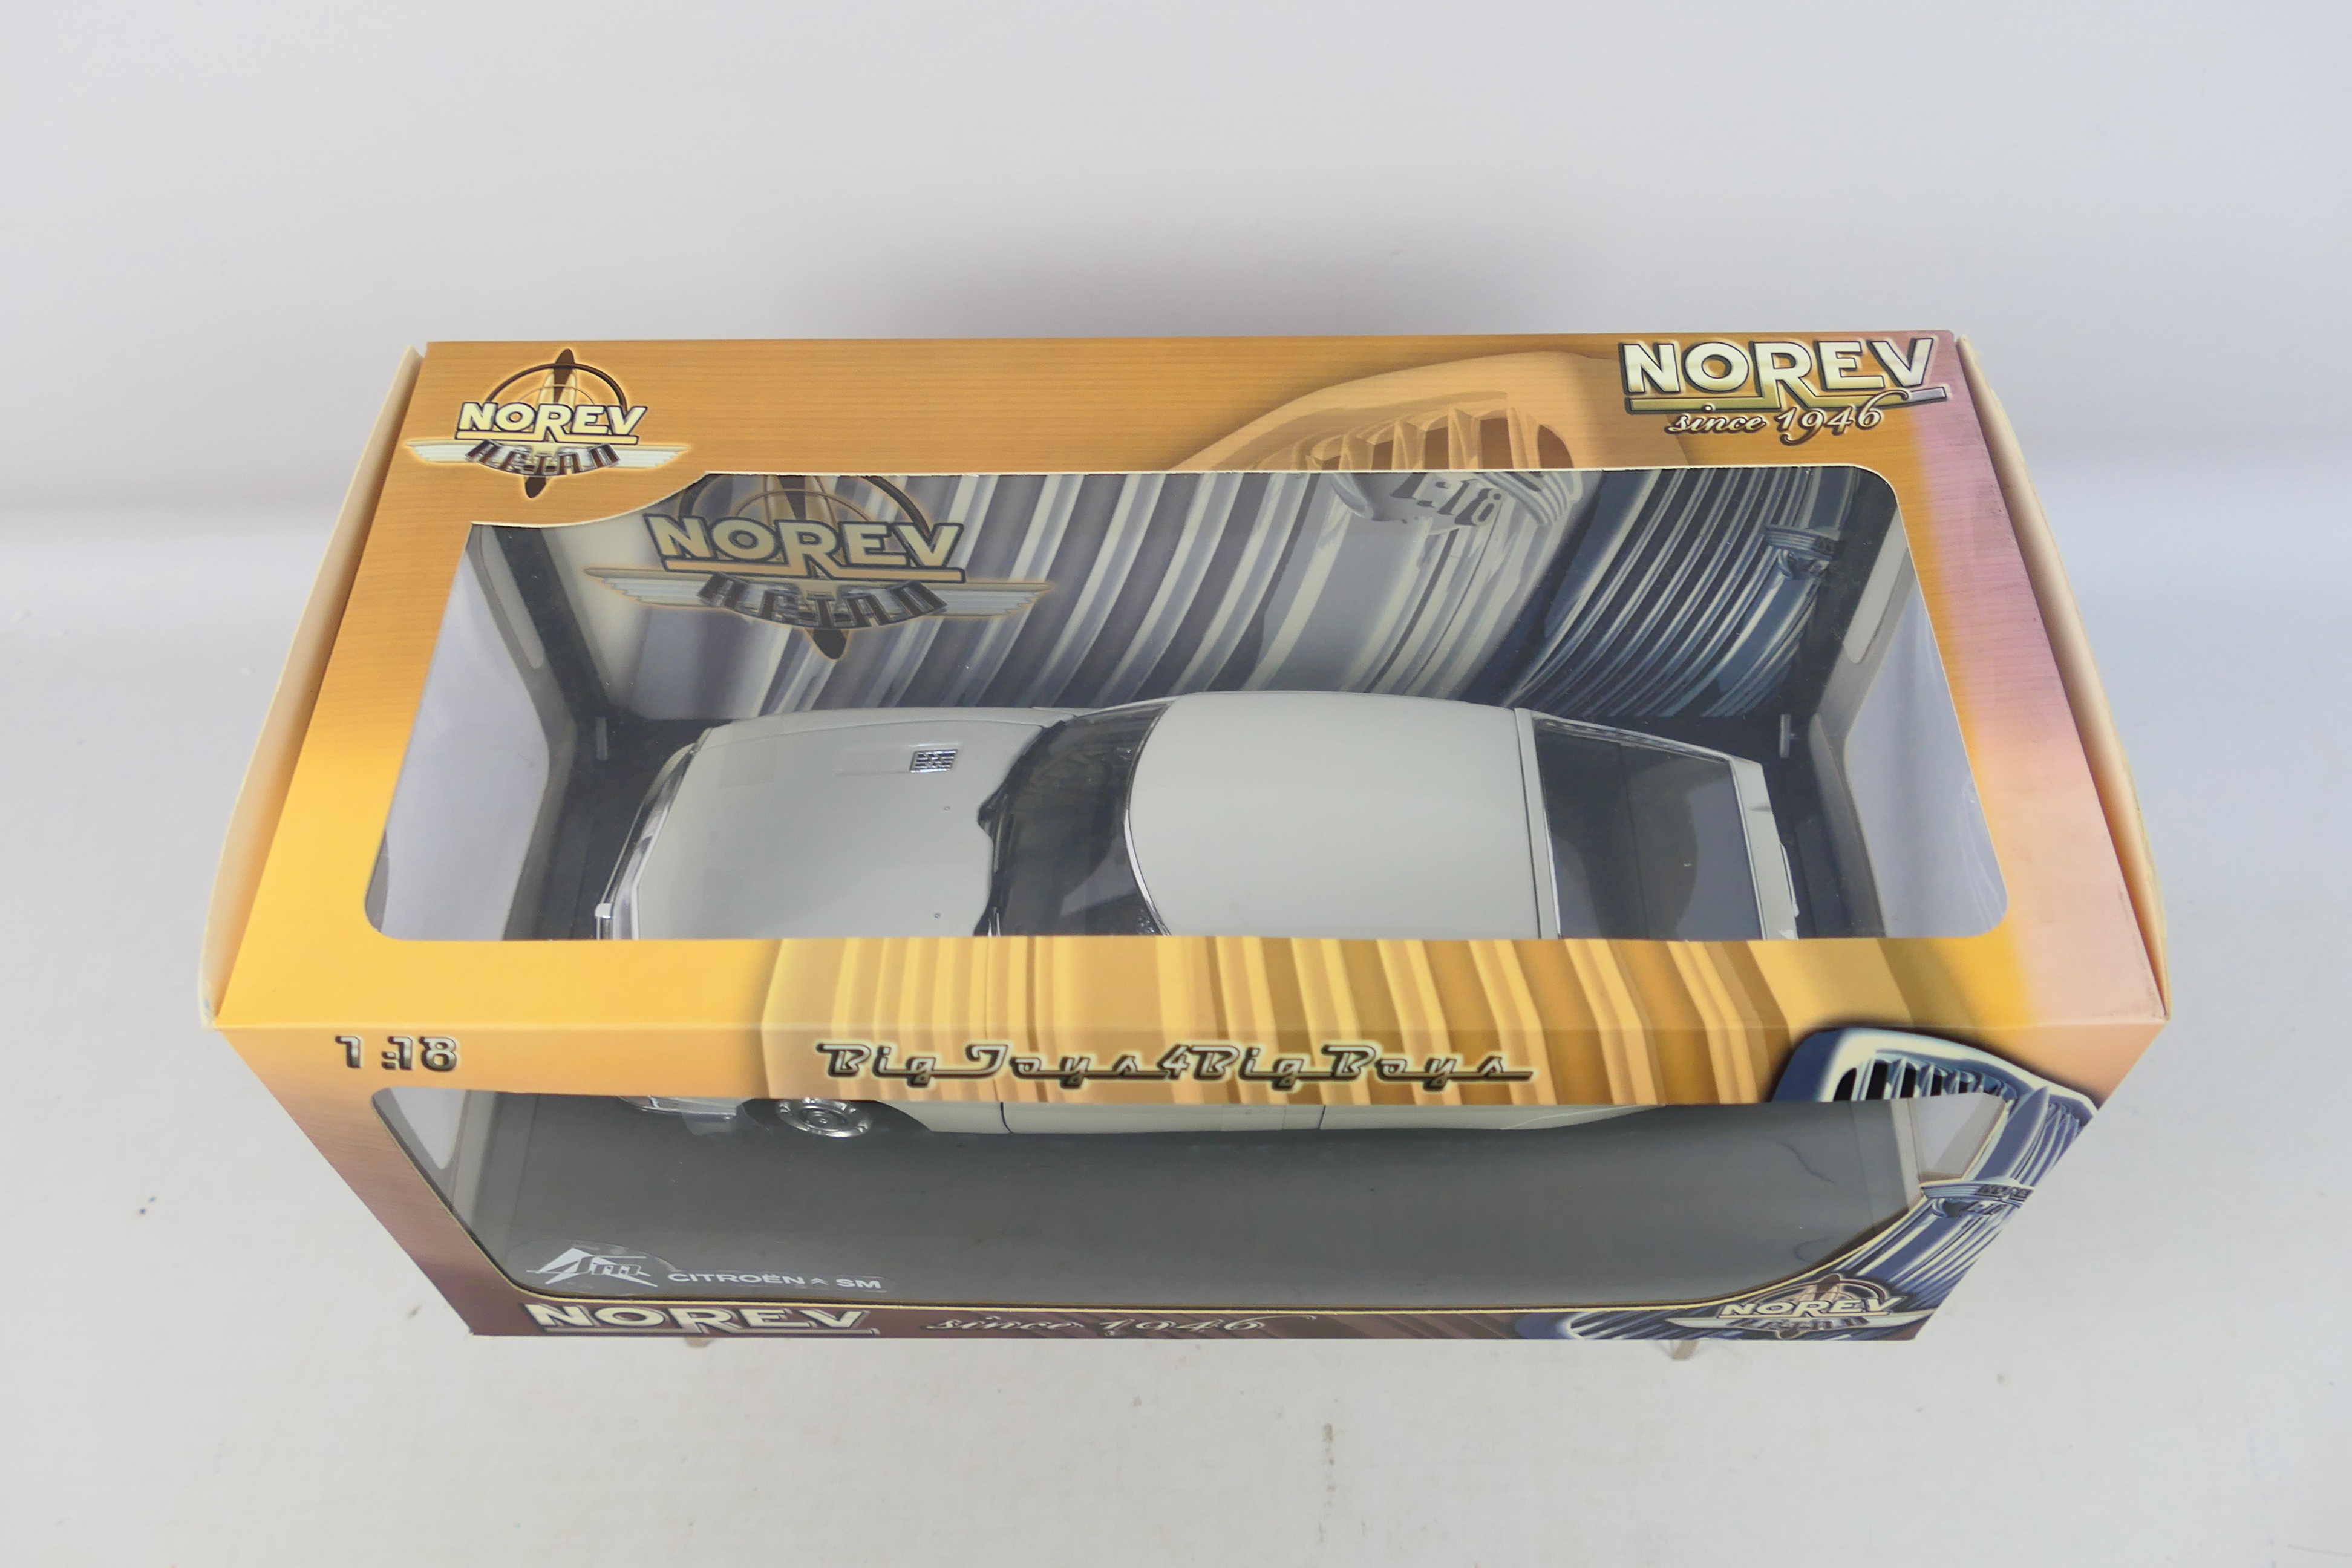 Norev - A boxed Norev #181584 1:18 scale Citroen SM. - Image 2 of 2